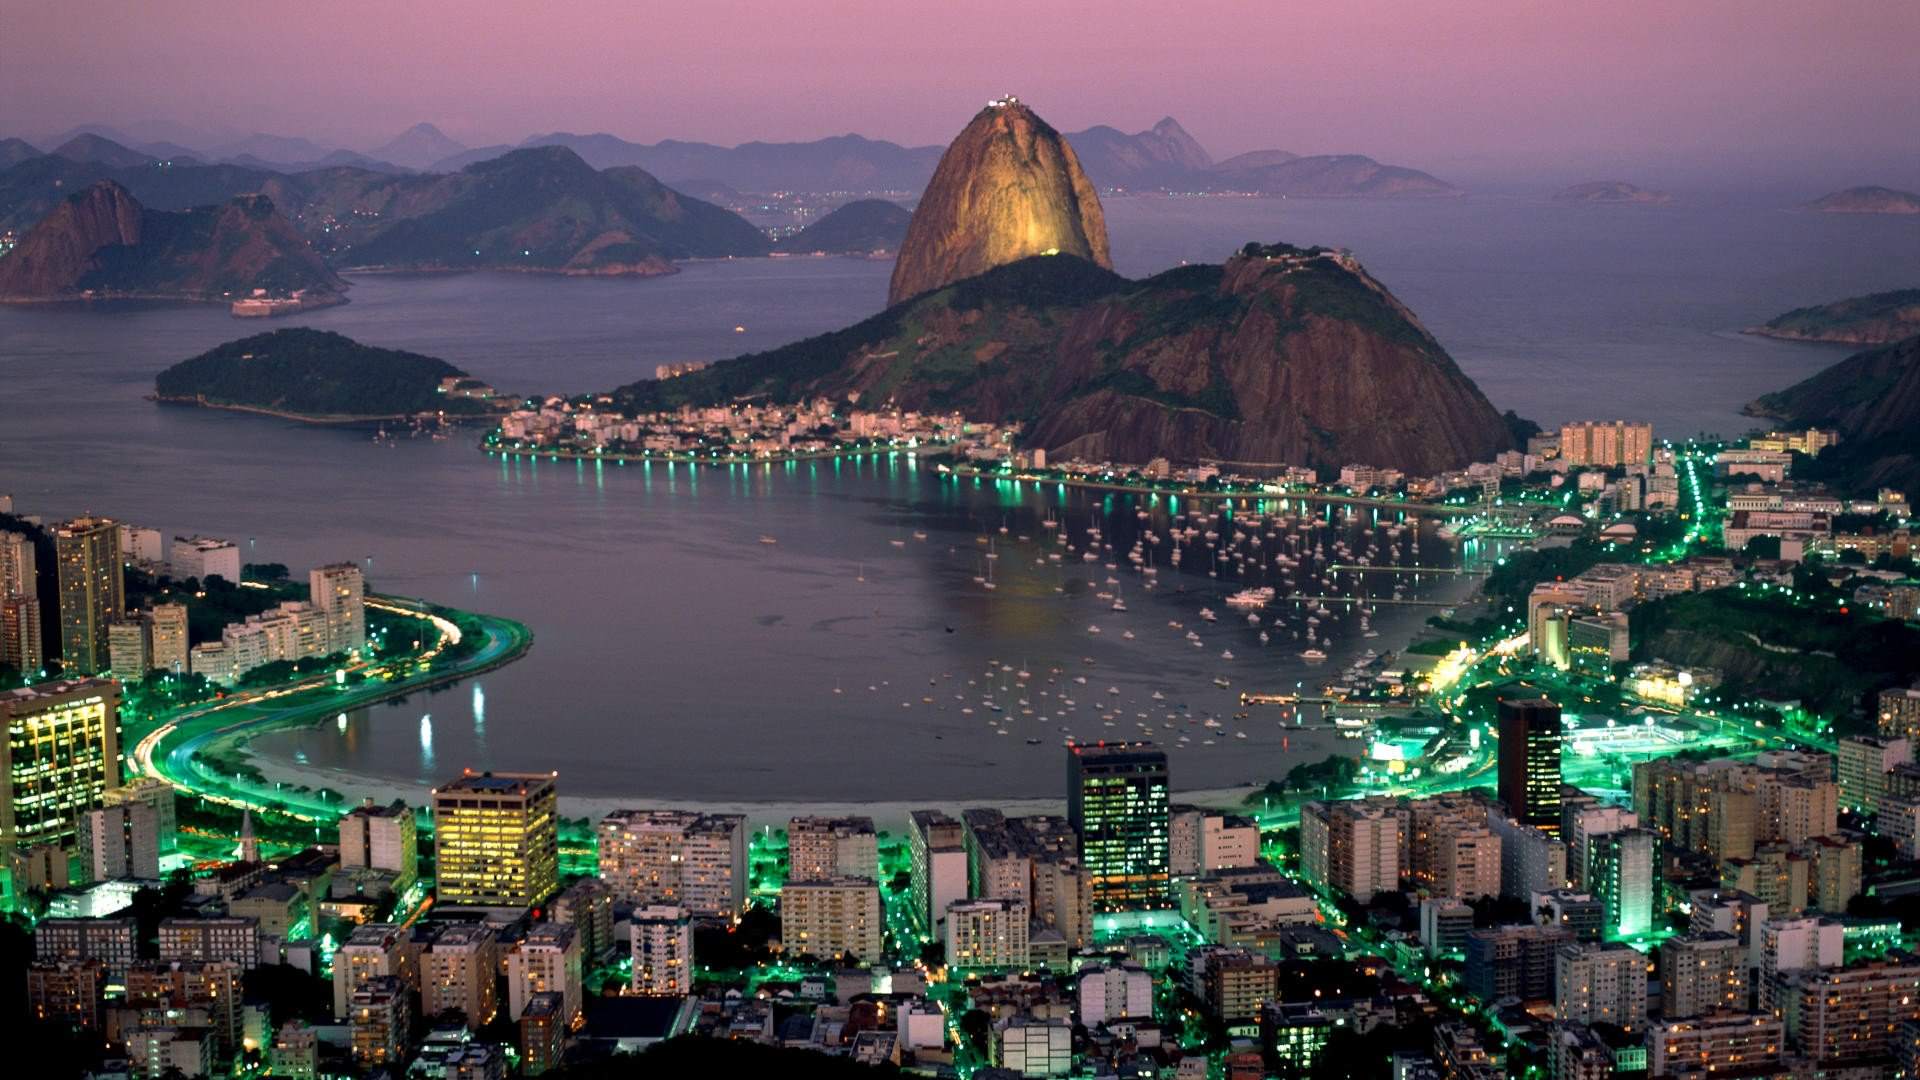 Rio De Janeiro wallpaper 1920x1080 Full HD (1080p) desktop